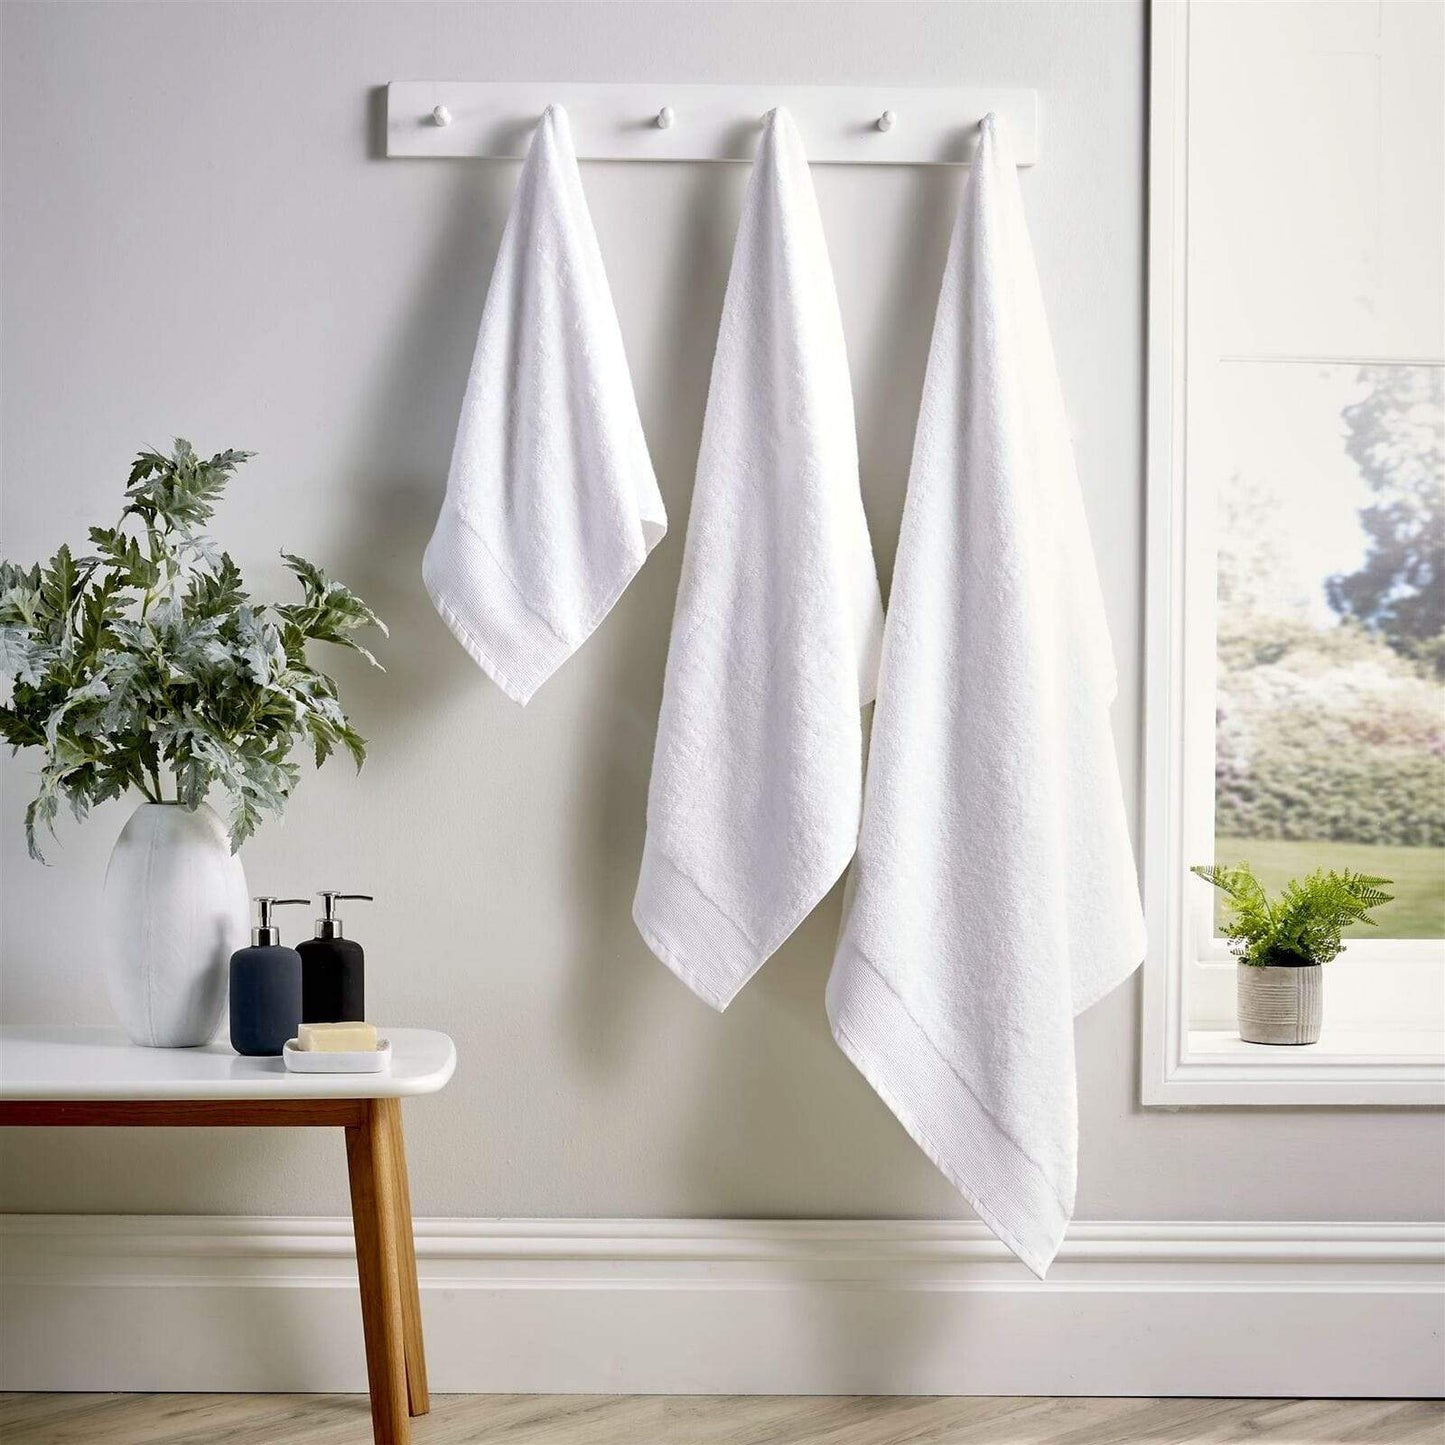 Luxury 600GSM Bamboo Towels, Eco Friendly Bathroom Essentials HAND TOWEL / WHITE OLIVIA ROCCO Towel